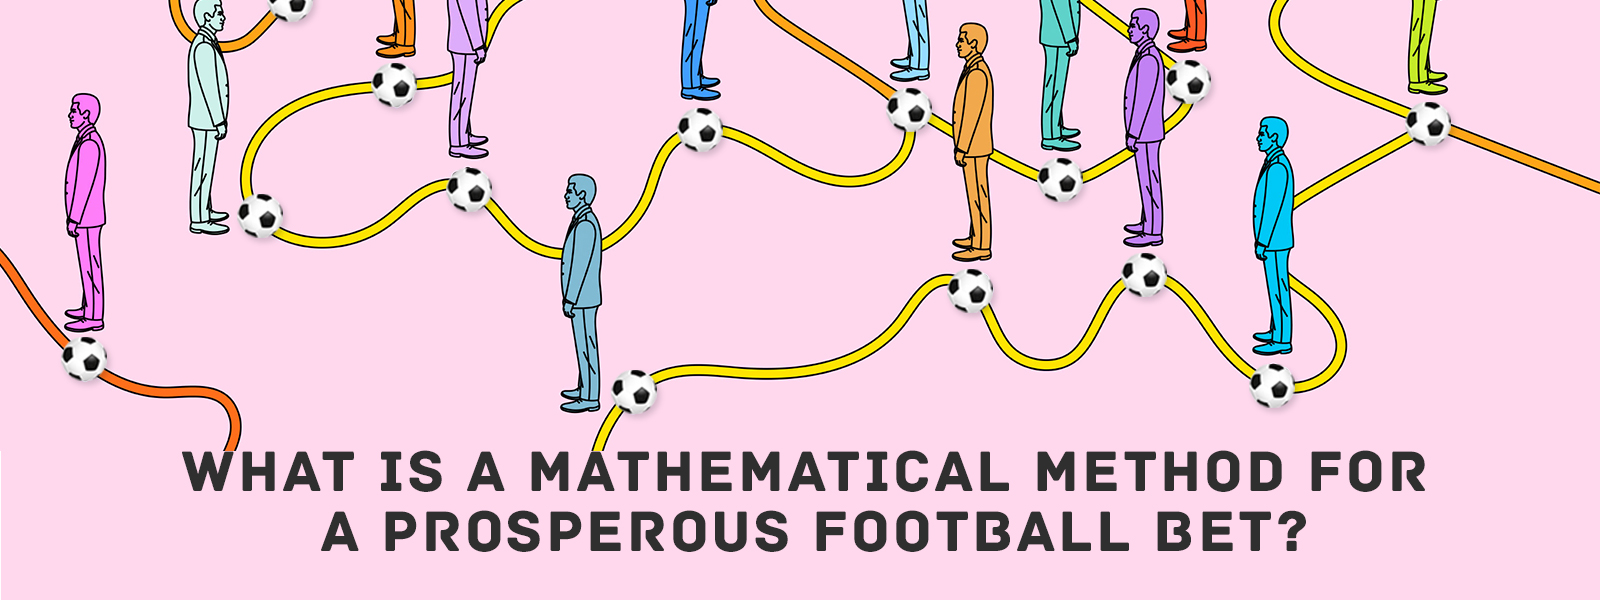 Applying Mathematical Methods When Betting On Football